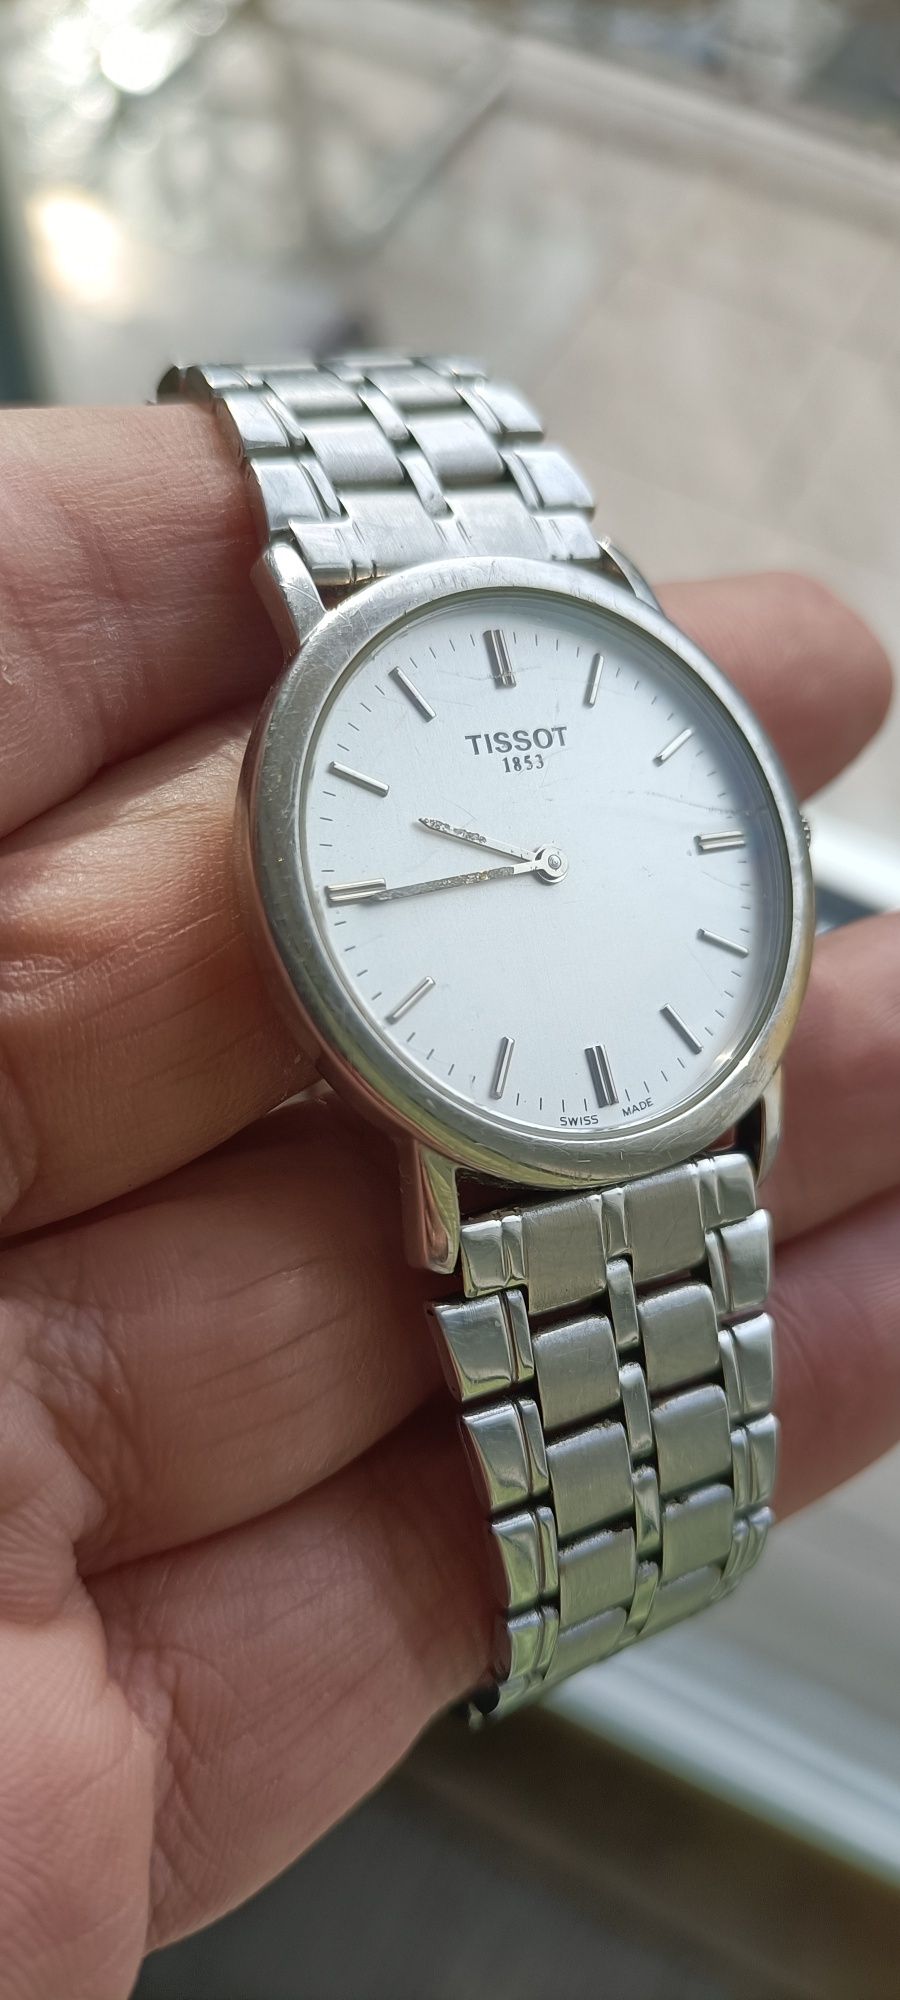 Stylowy zegarek Tissot vintage C276K sprawny